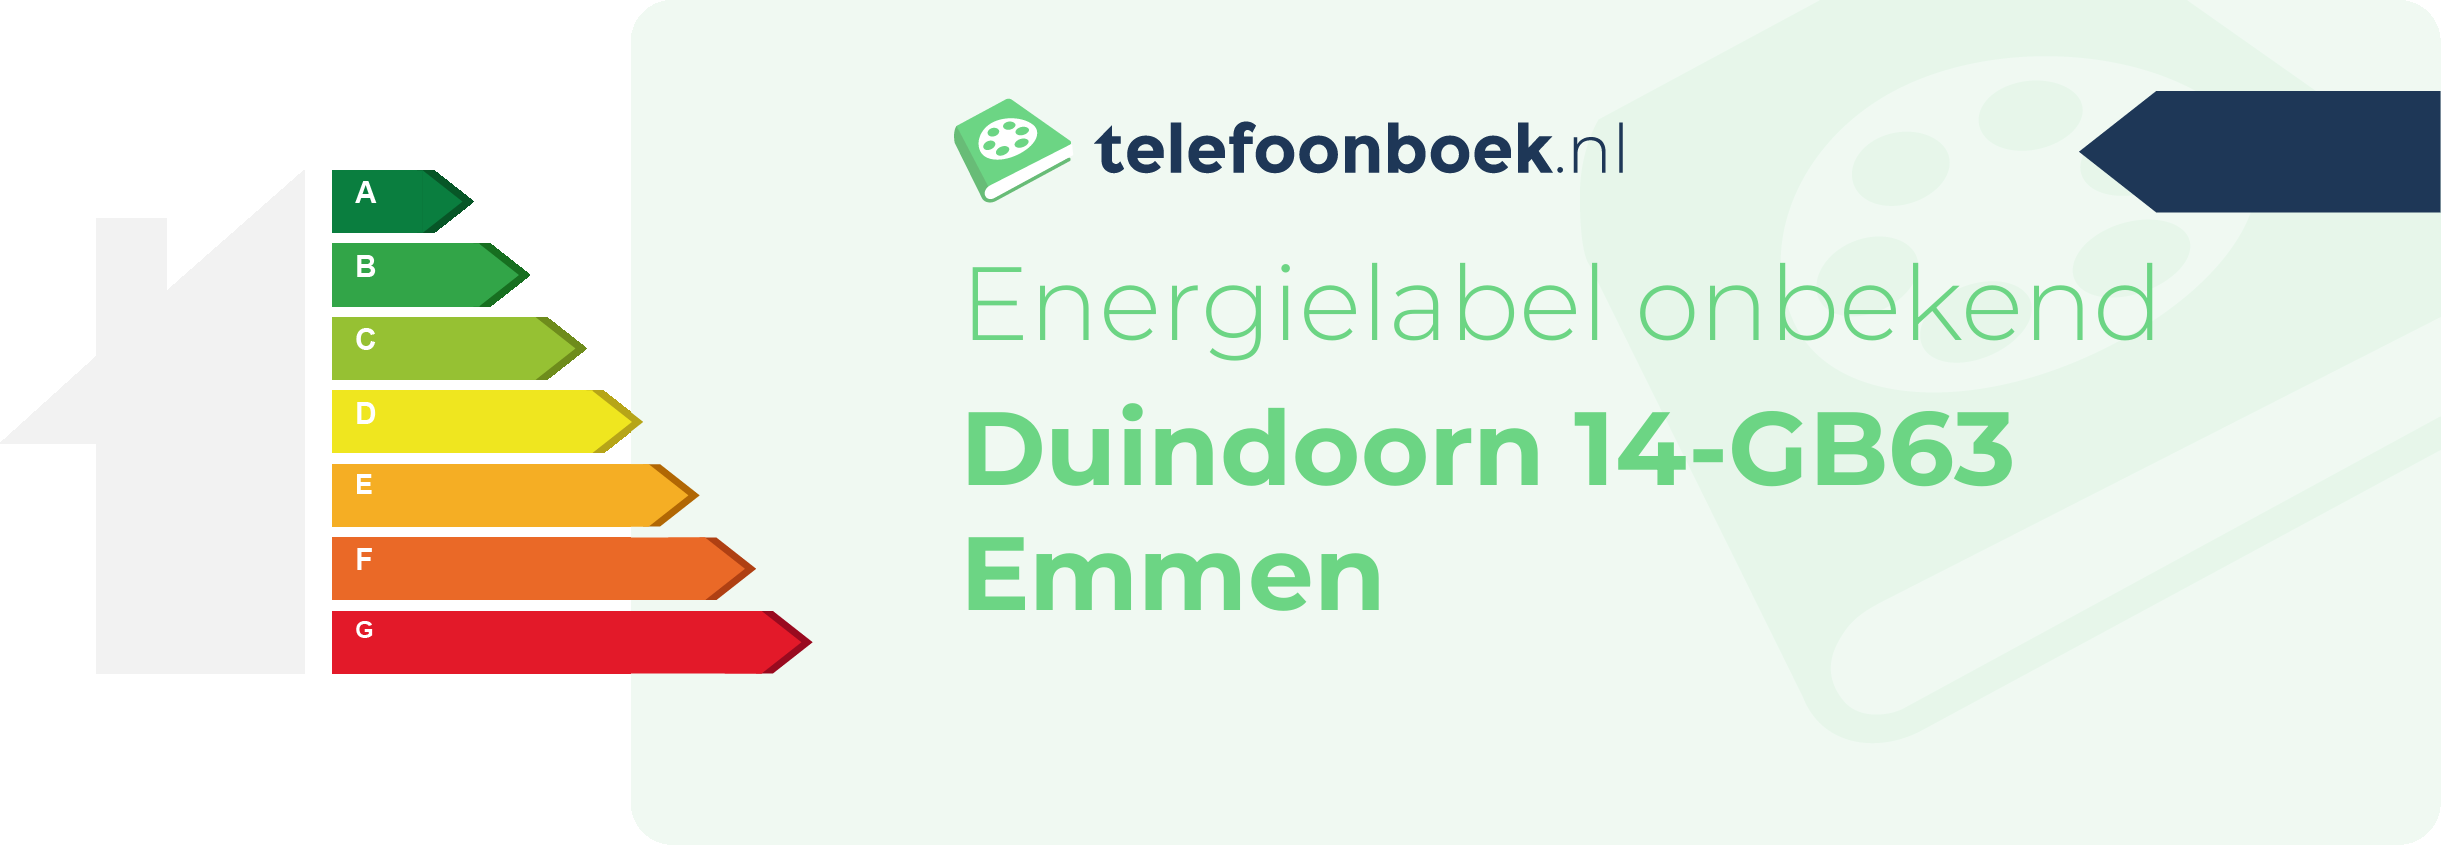 Energielabel Duindoorn 14-GB63 Emmen